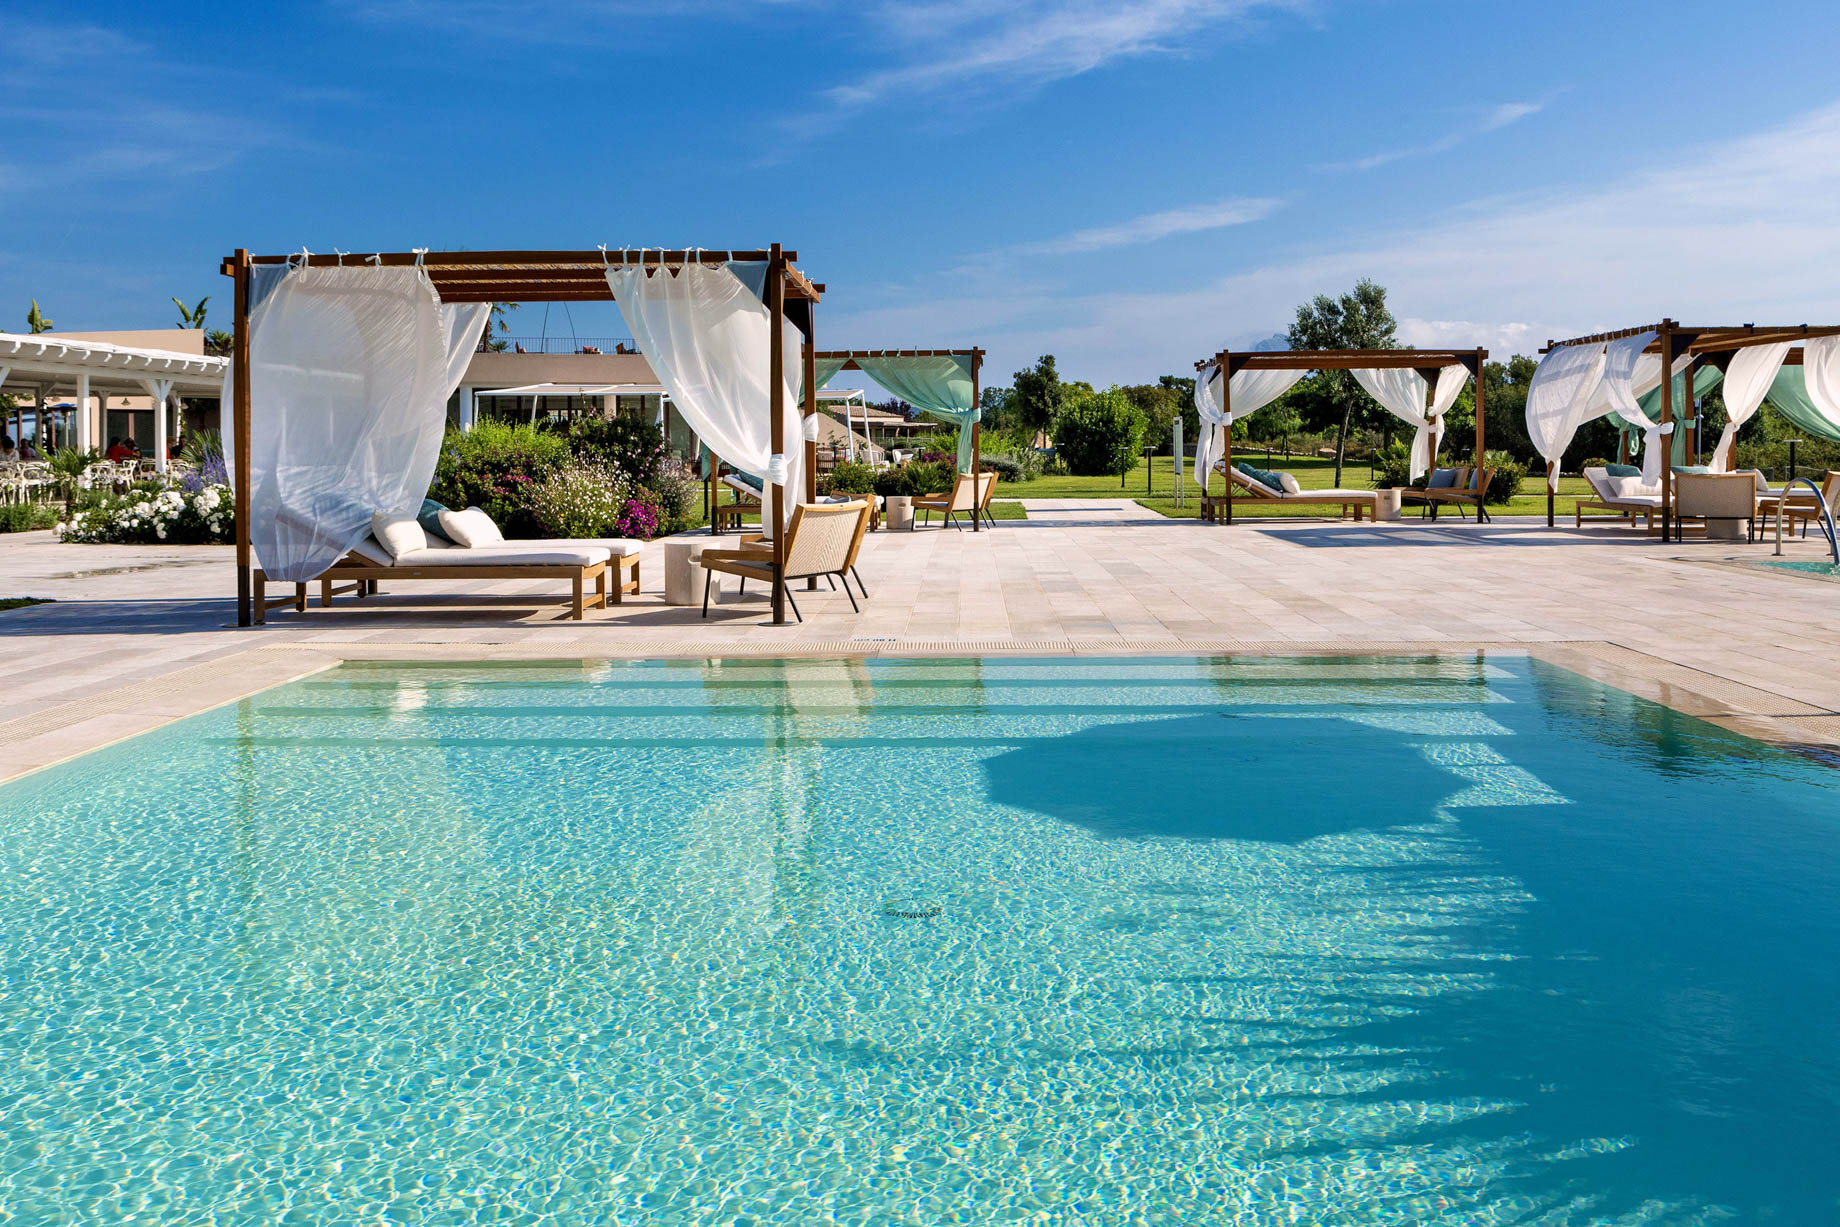 Baglioni Resort Sardinia – San Teodoro, Sardegna, Italy – Pool Deck